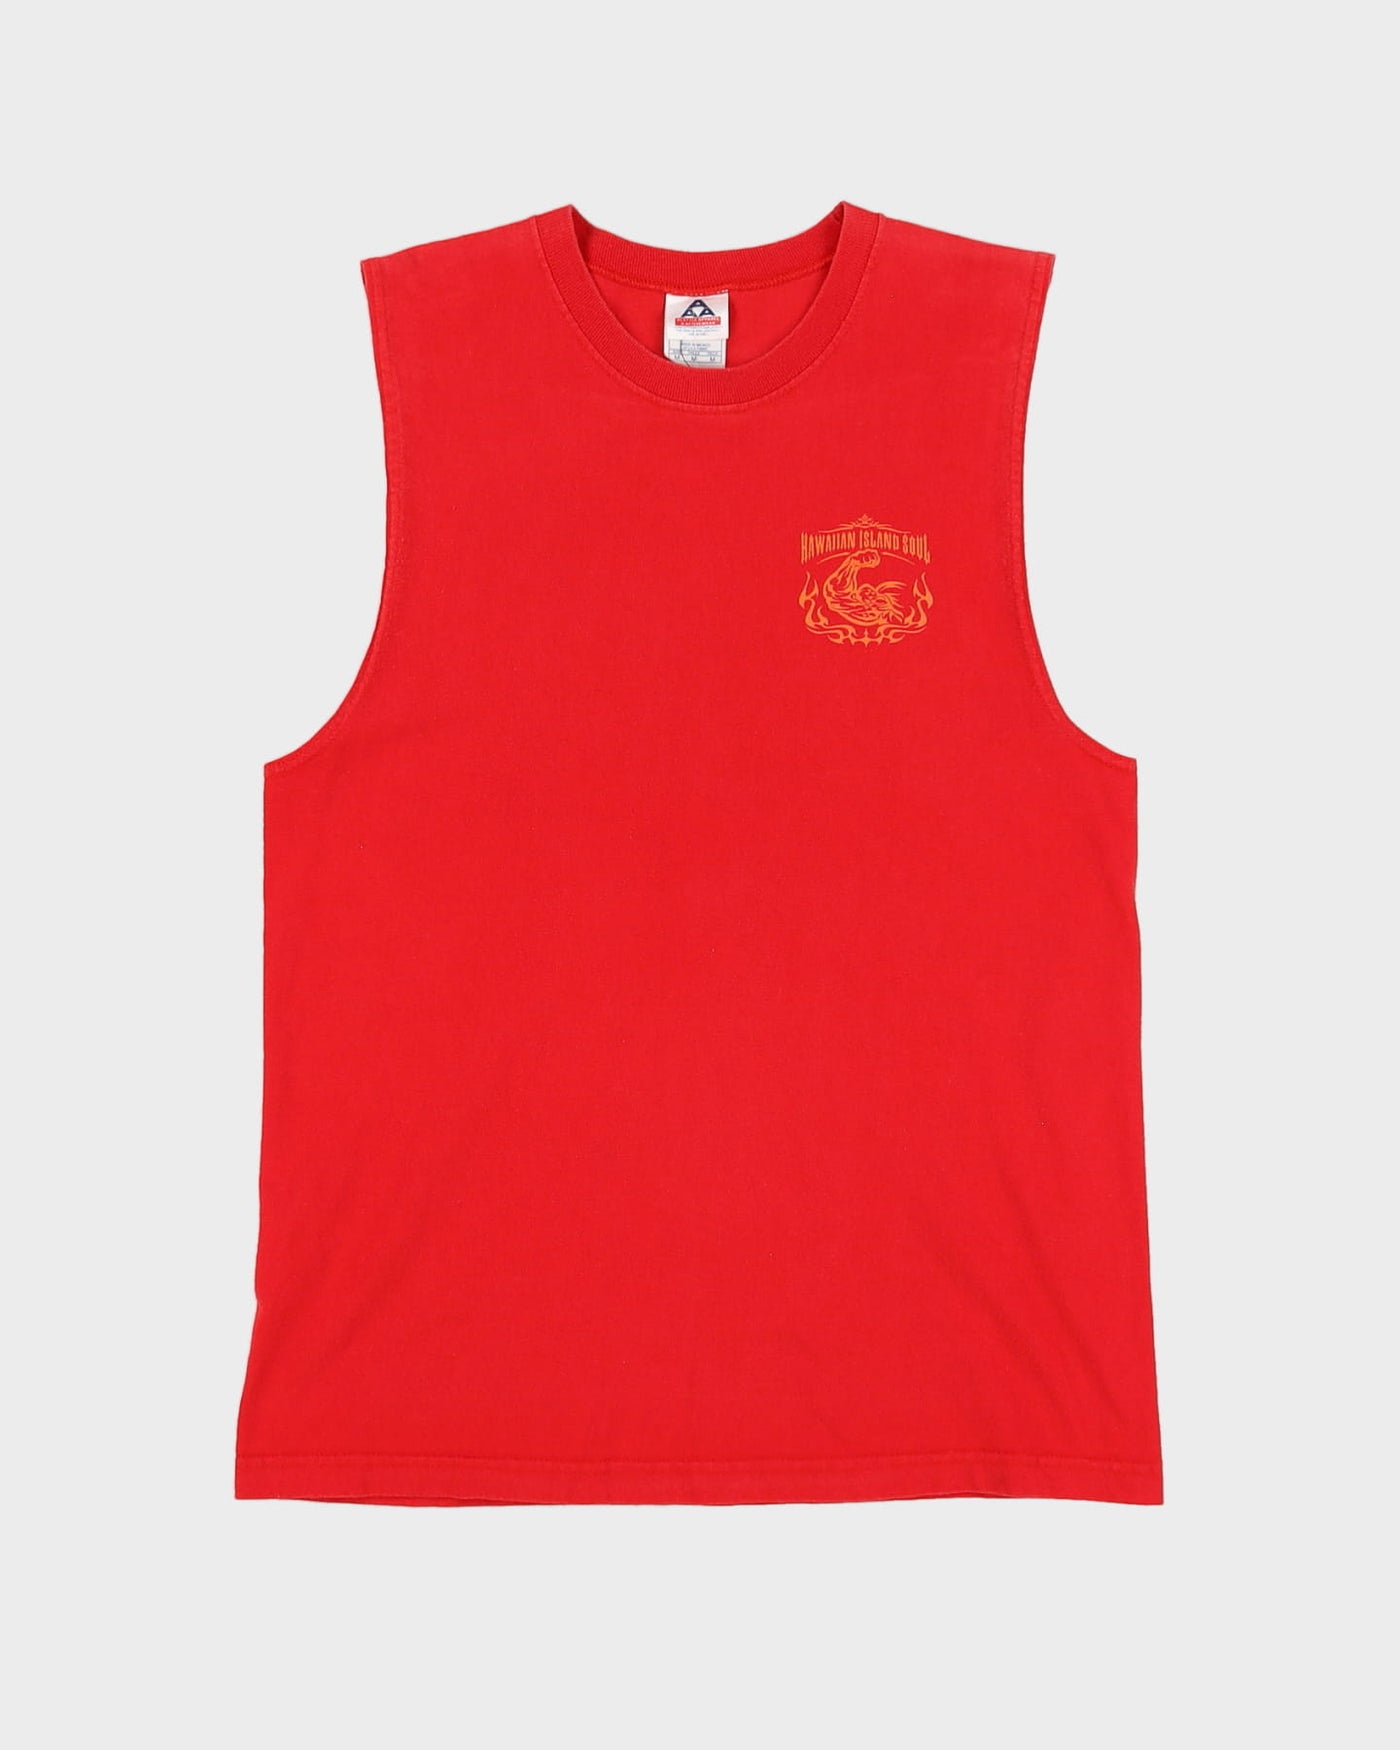 Kealoha Gym Red Vest - M